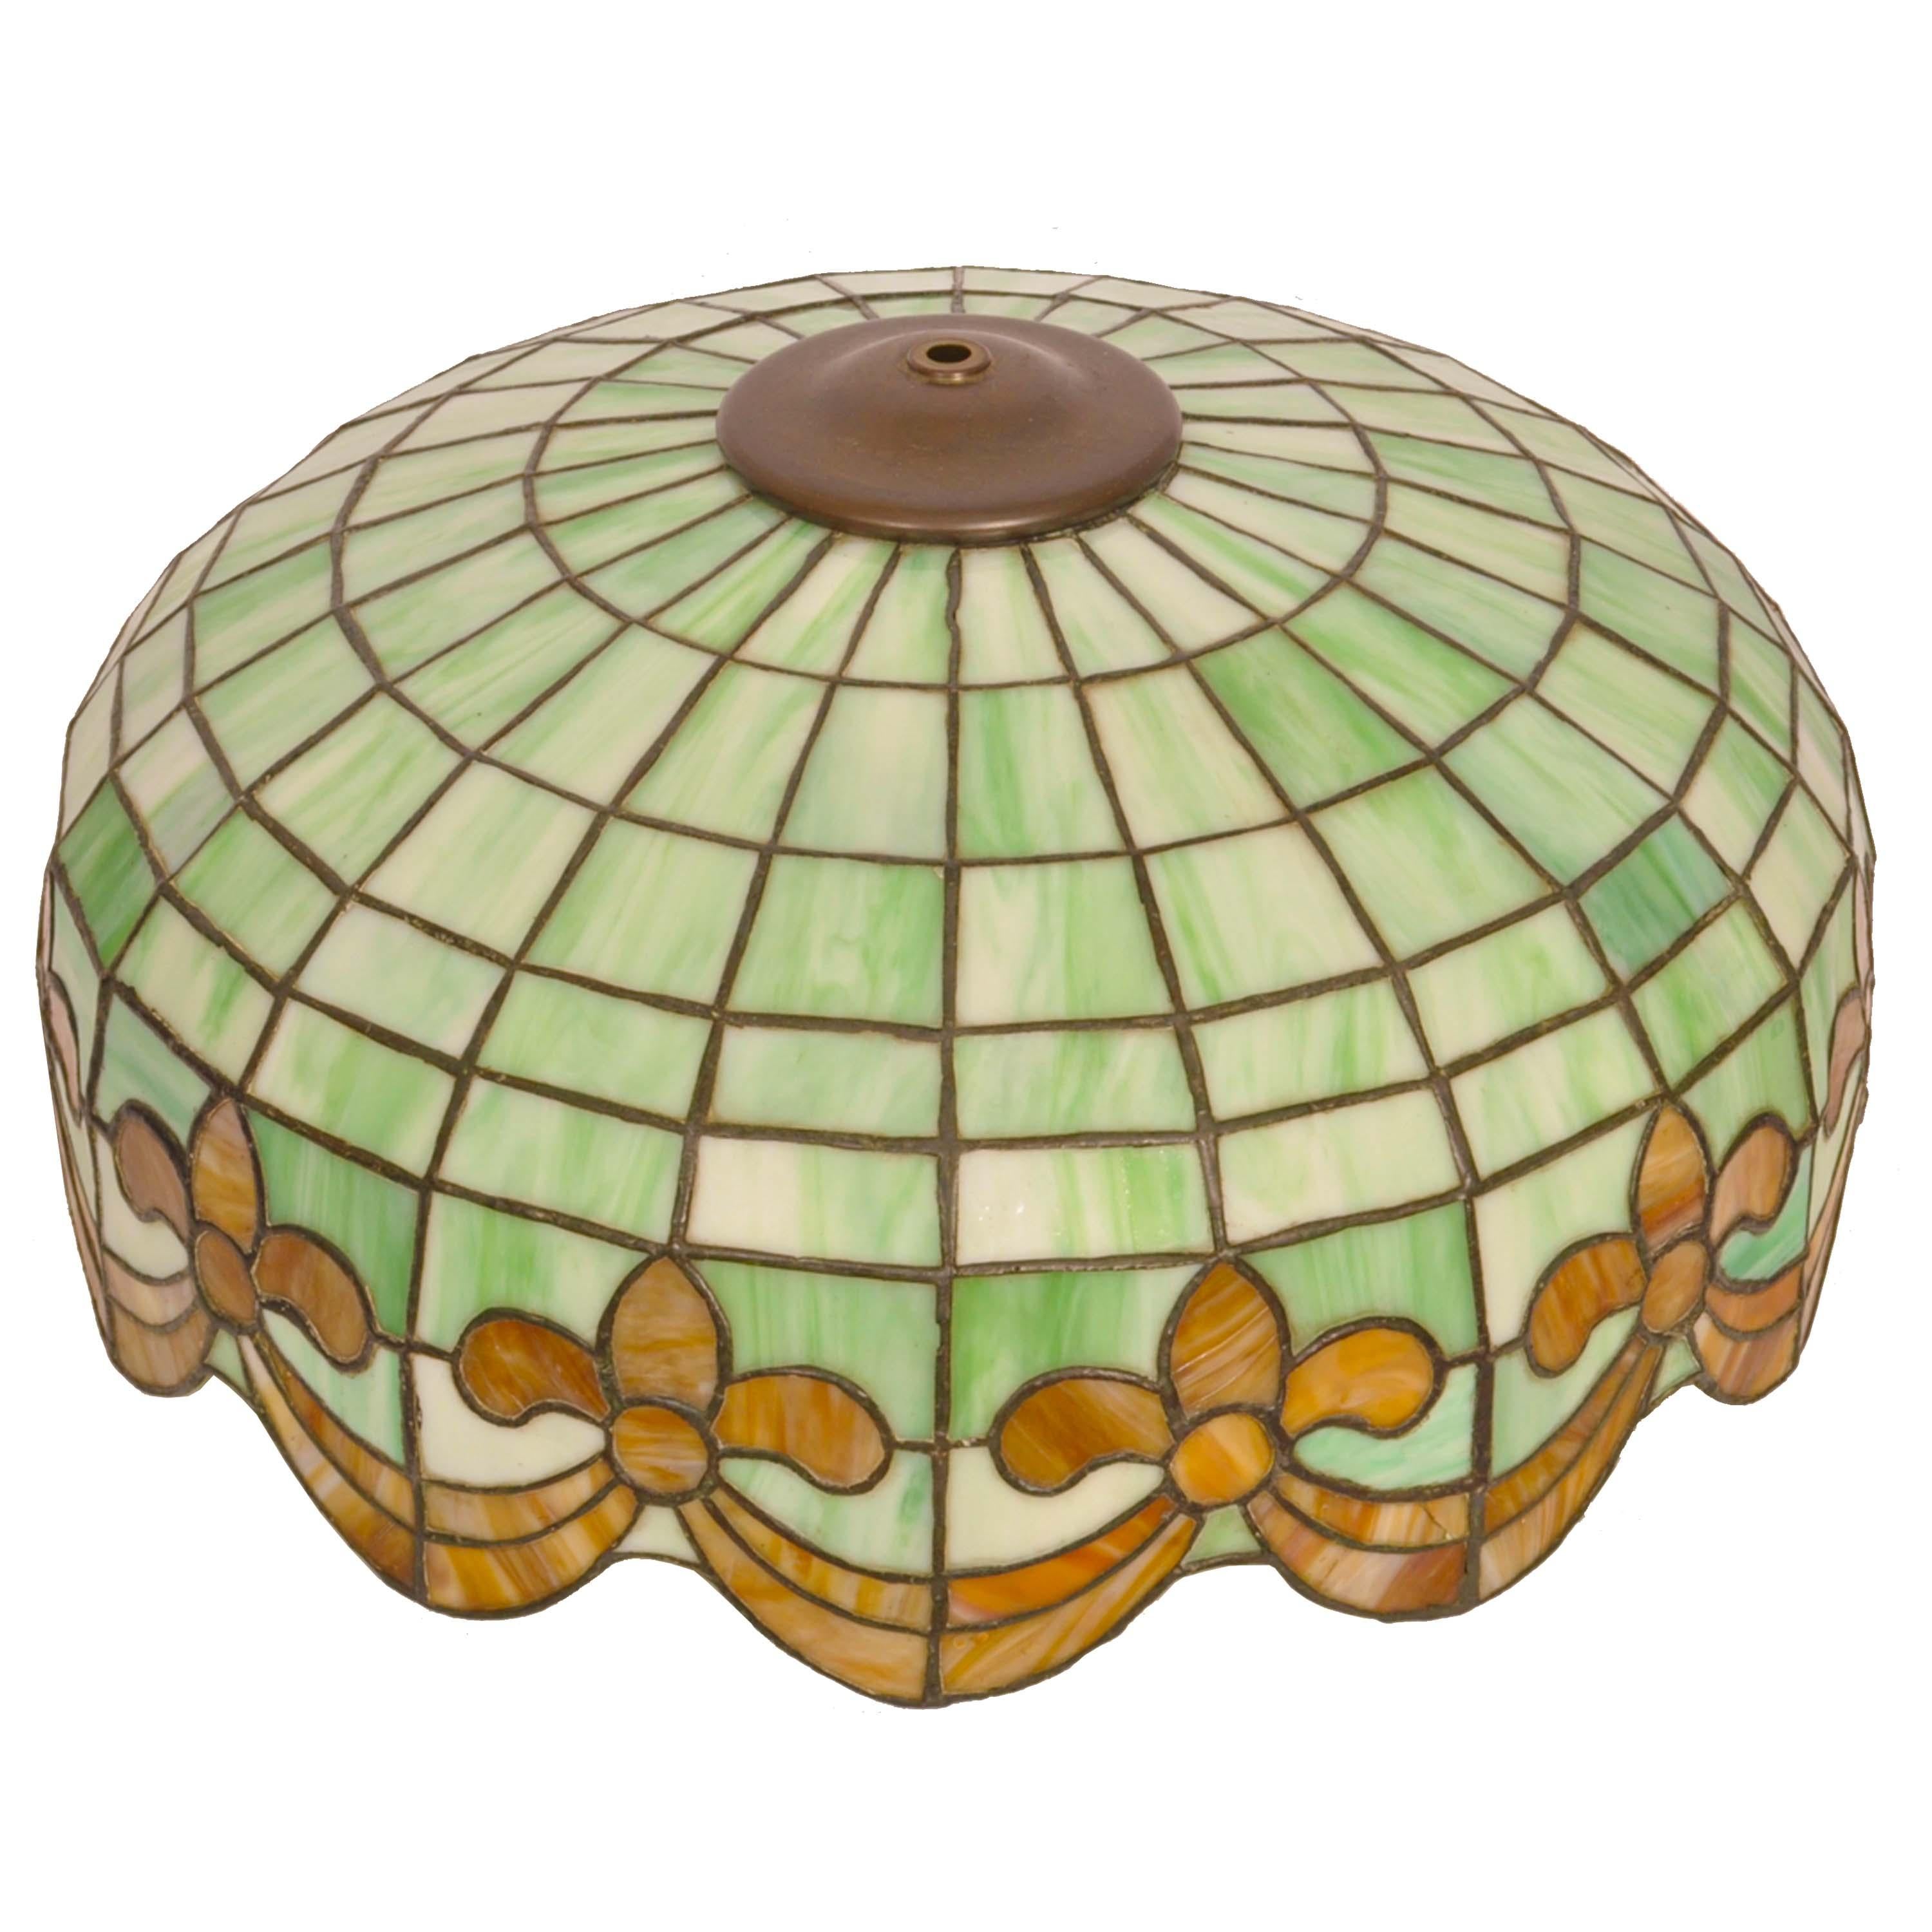 Antique American Art Nouveau Bronze & Leaded Glass Table Lamp by Wilkinson, 1910 For Sale 3